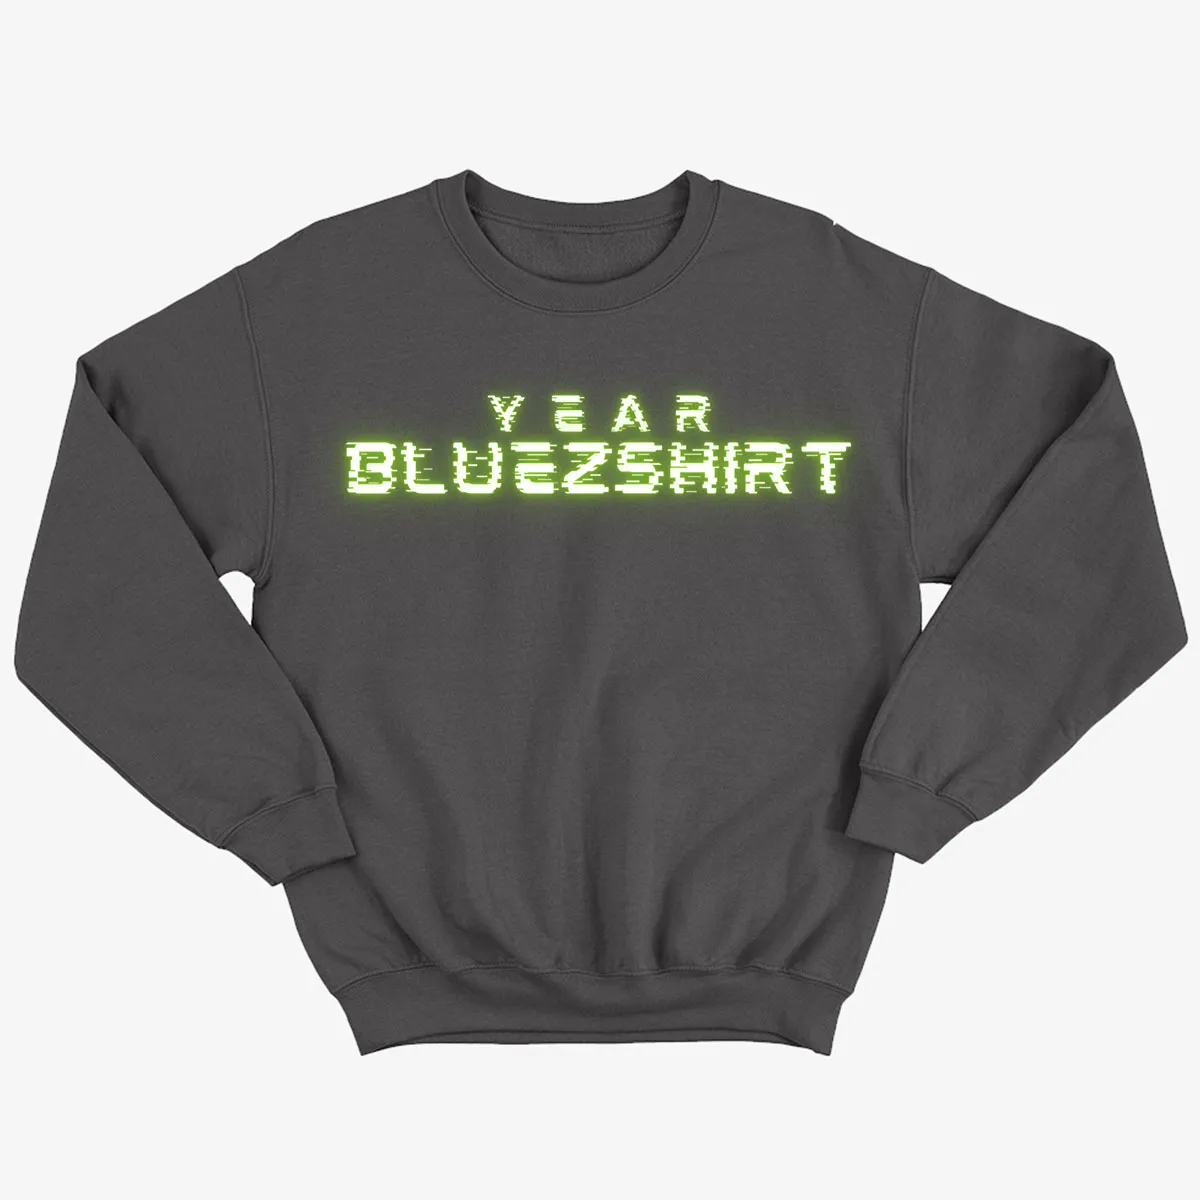 Year Bluezshirt Sweatshirt - Black